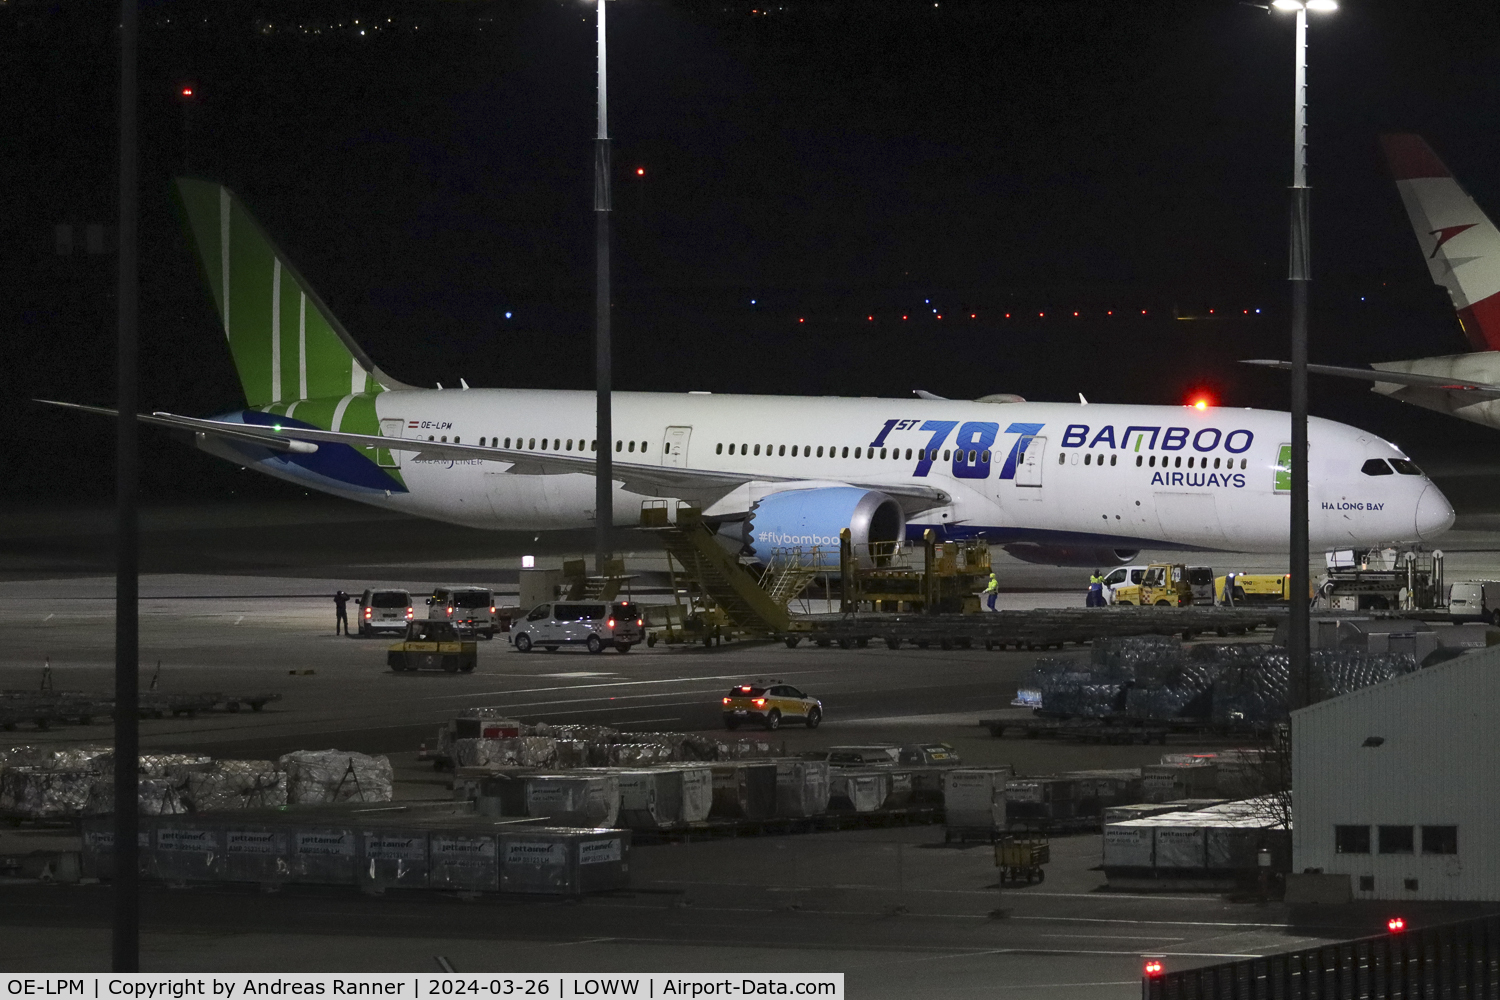 OE-LPM, 2019 Boeing 787-9 Dreamliner C/N 62736, new Boeing 787 for Austrian Airlines, still in Bamboo Airways cs